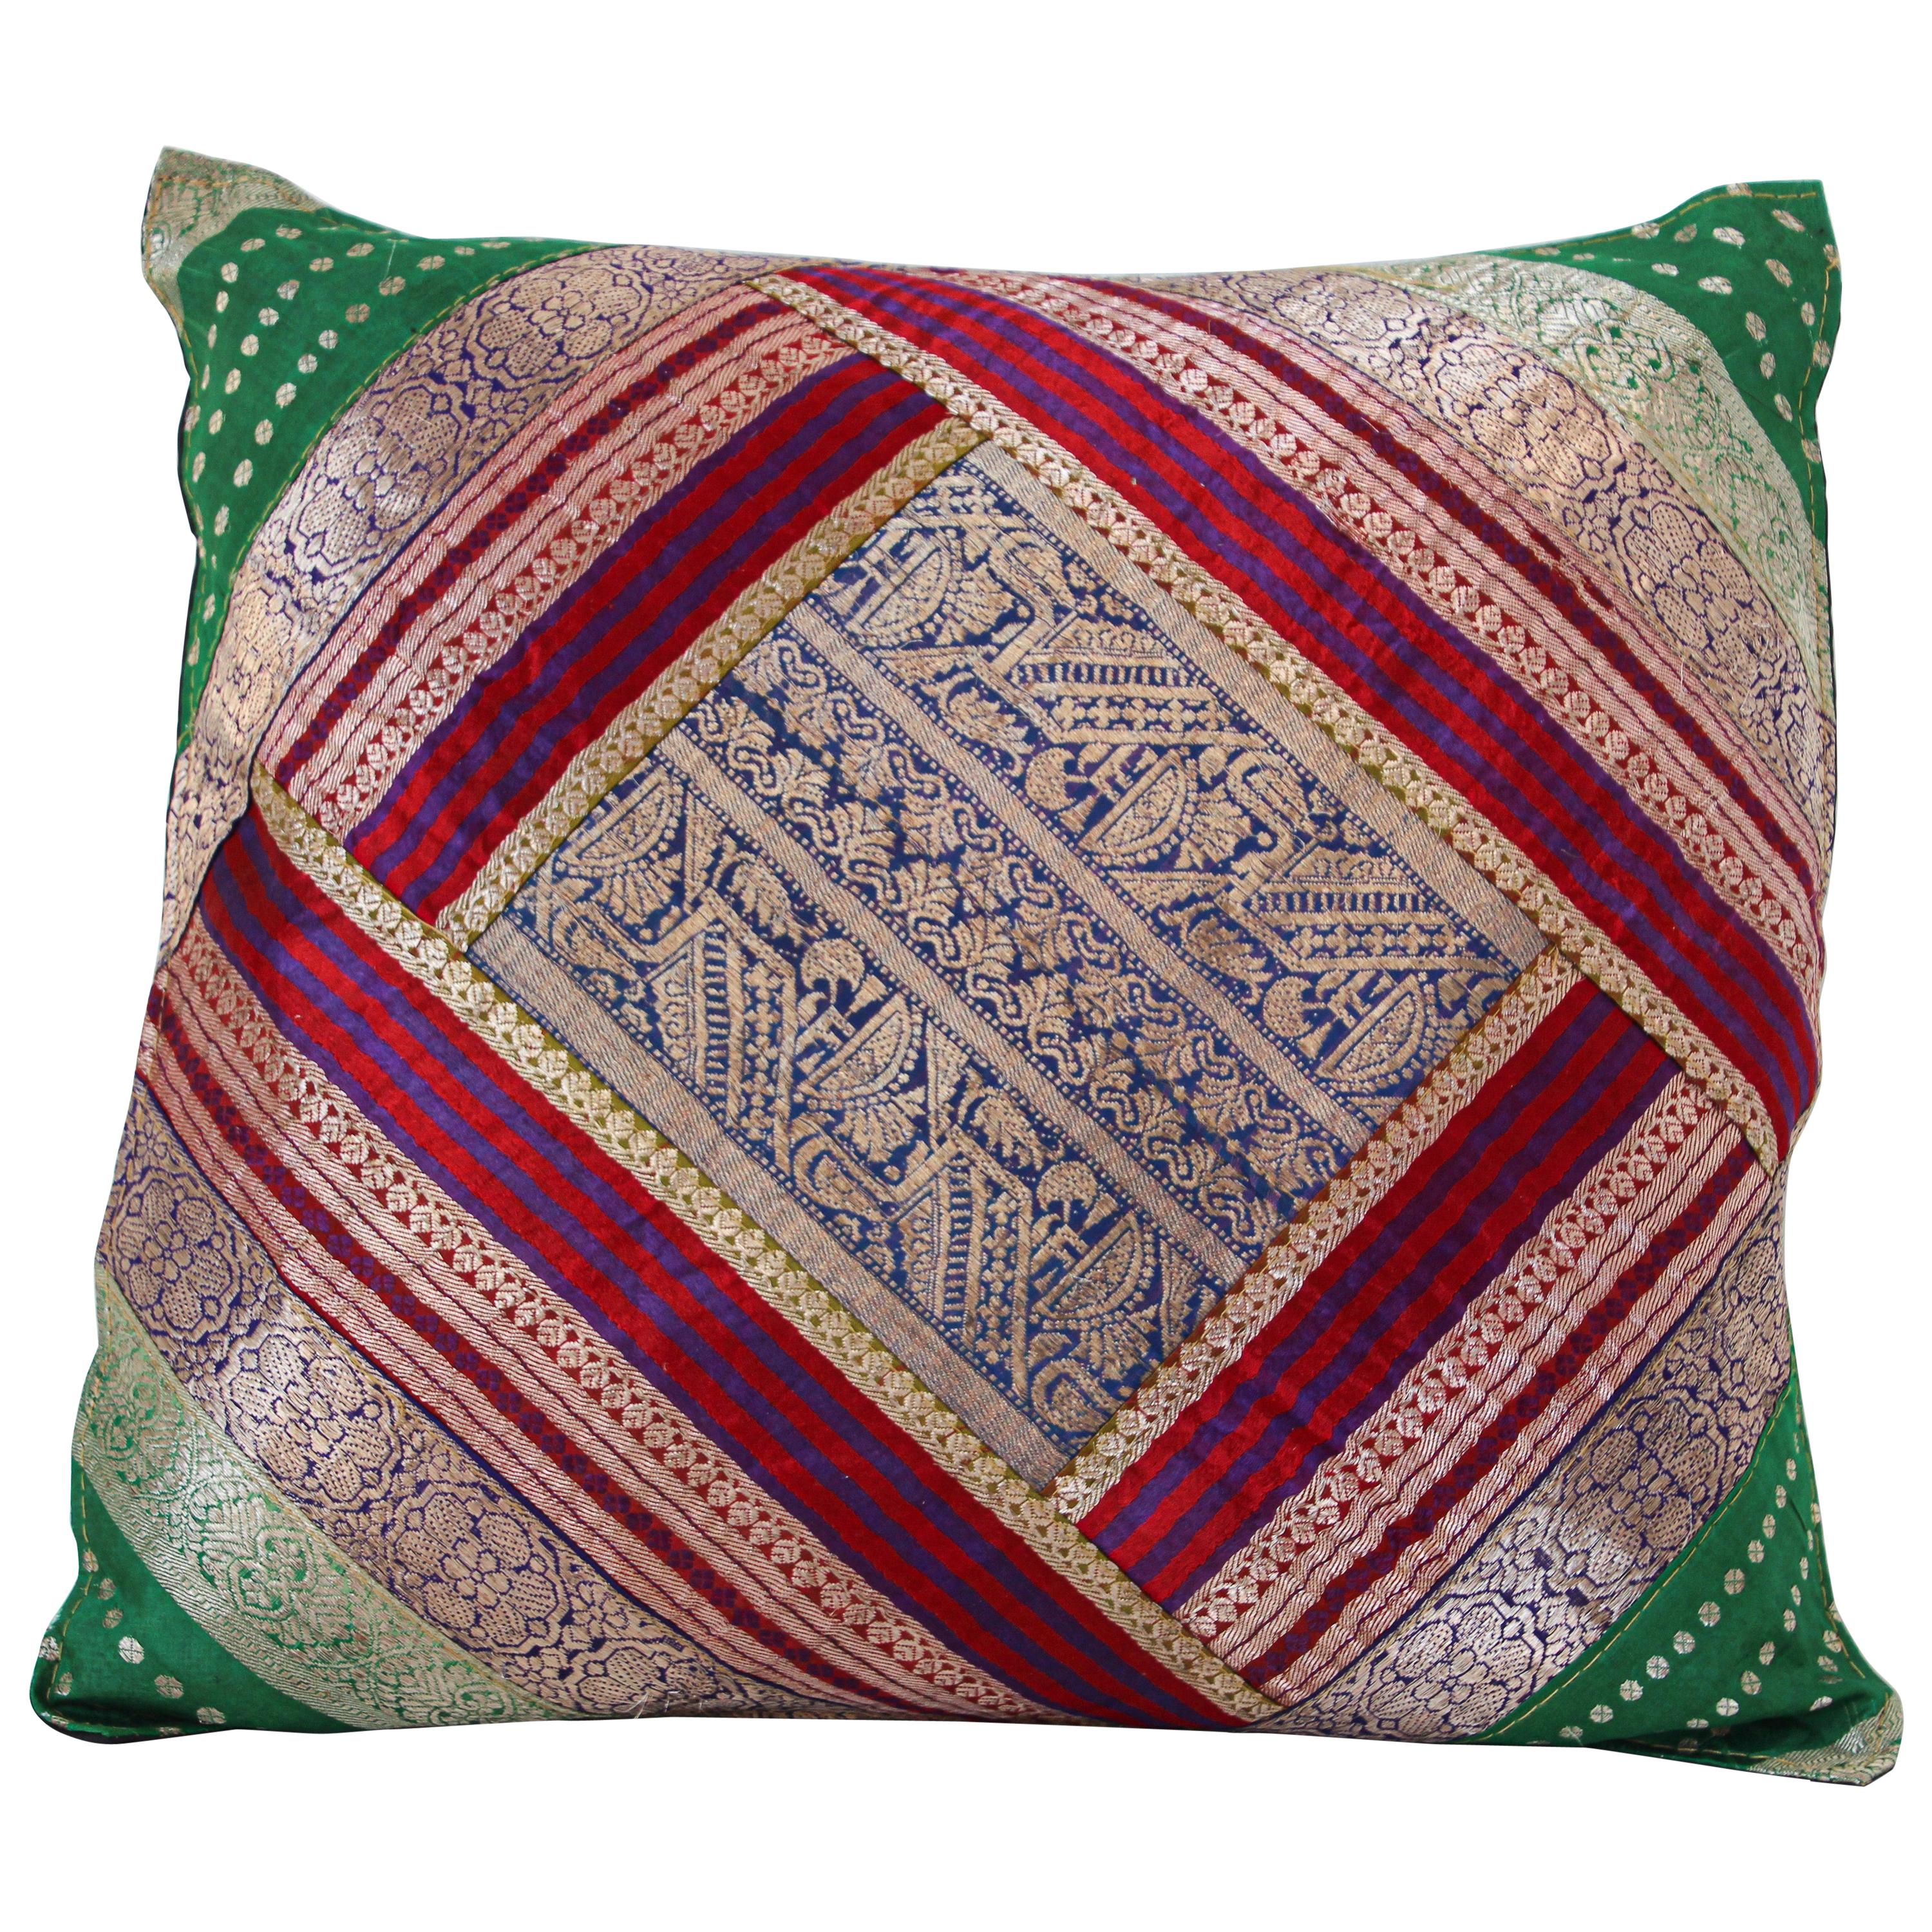 Decorative Throw Pillow Made from Vintage Sari Borders, India